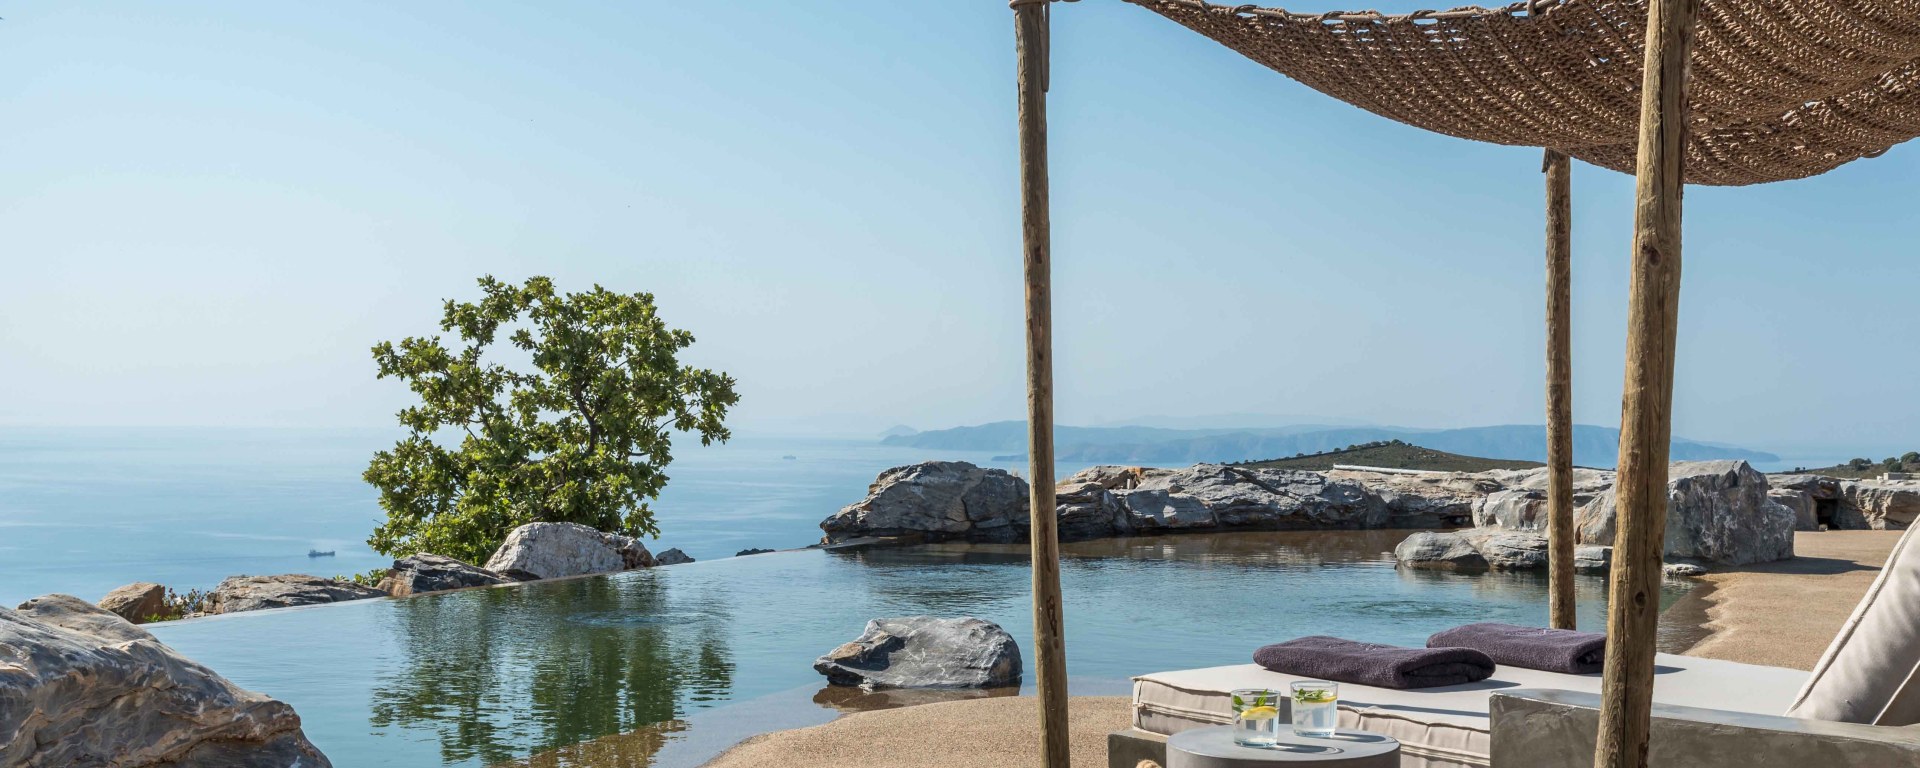 Luxus Ferienhaus Insel Kea Mieten - Villa Tranquility